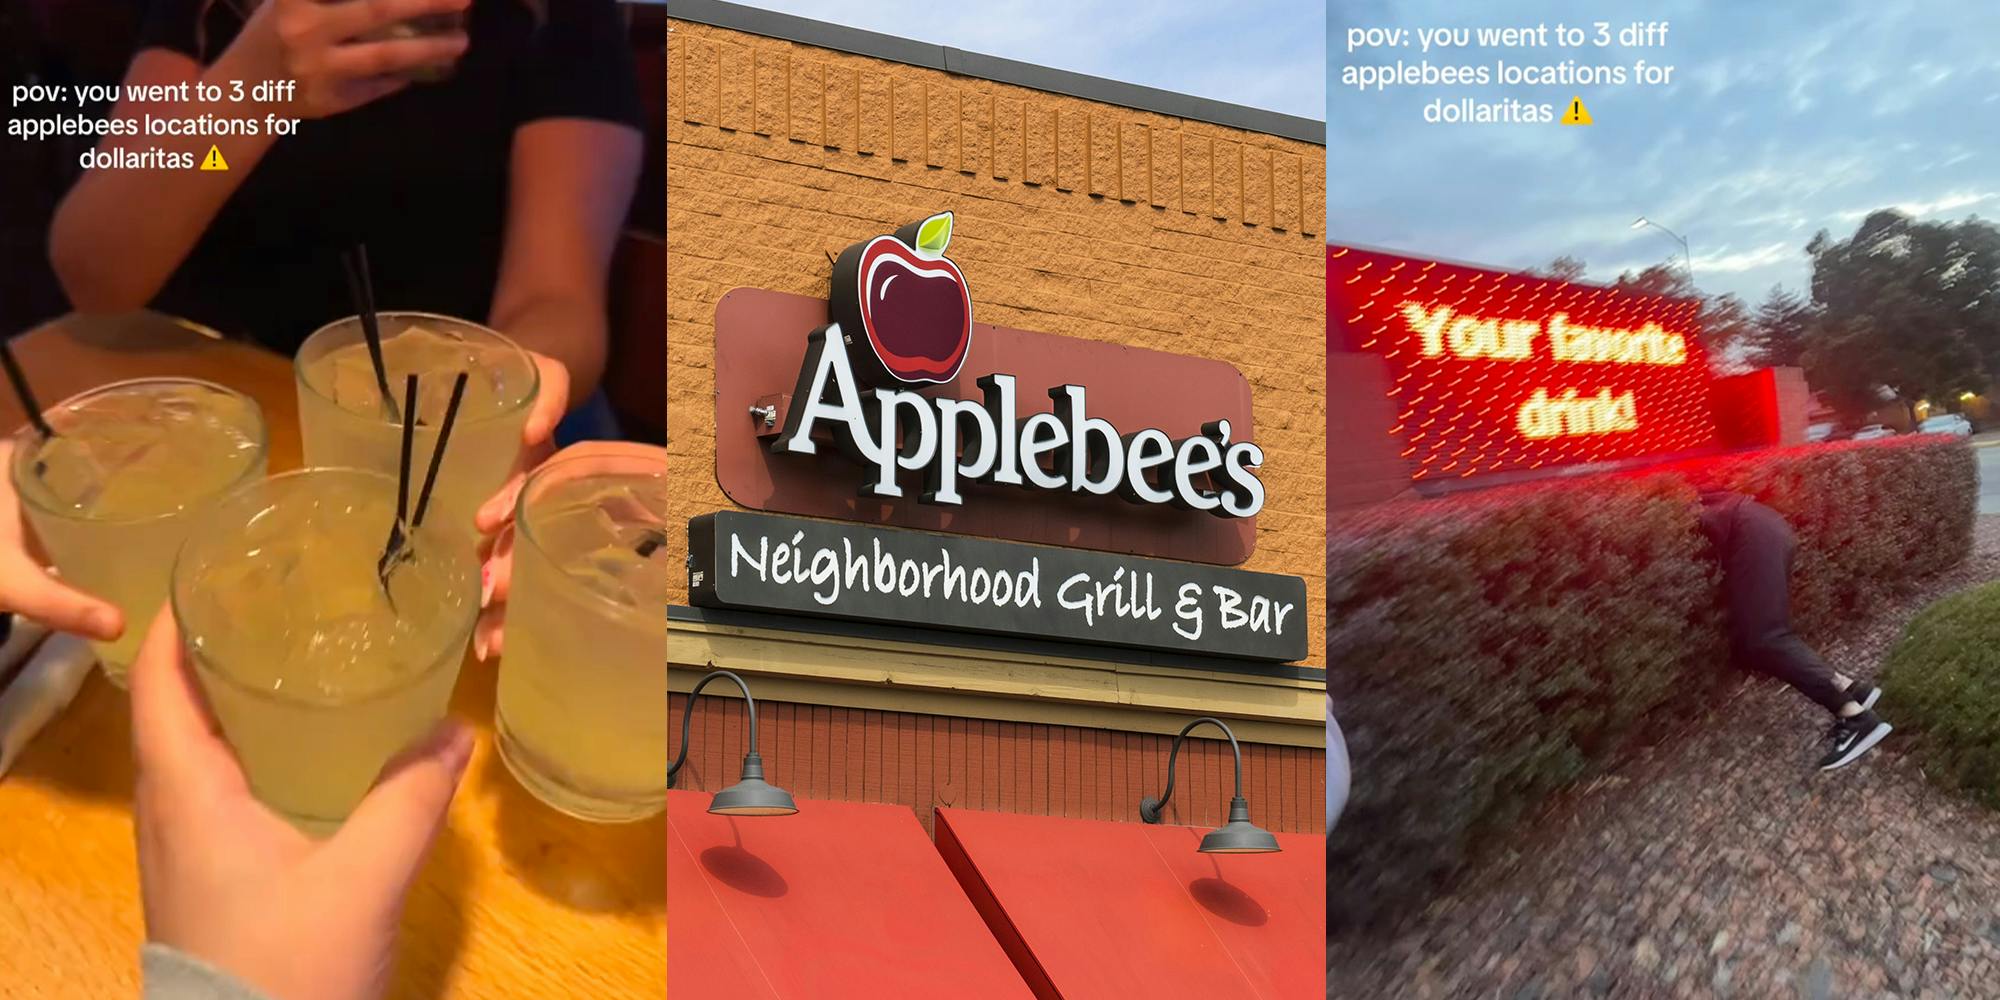 Customers Visit 3 Different Applebee's Locations for 1 Margaritas